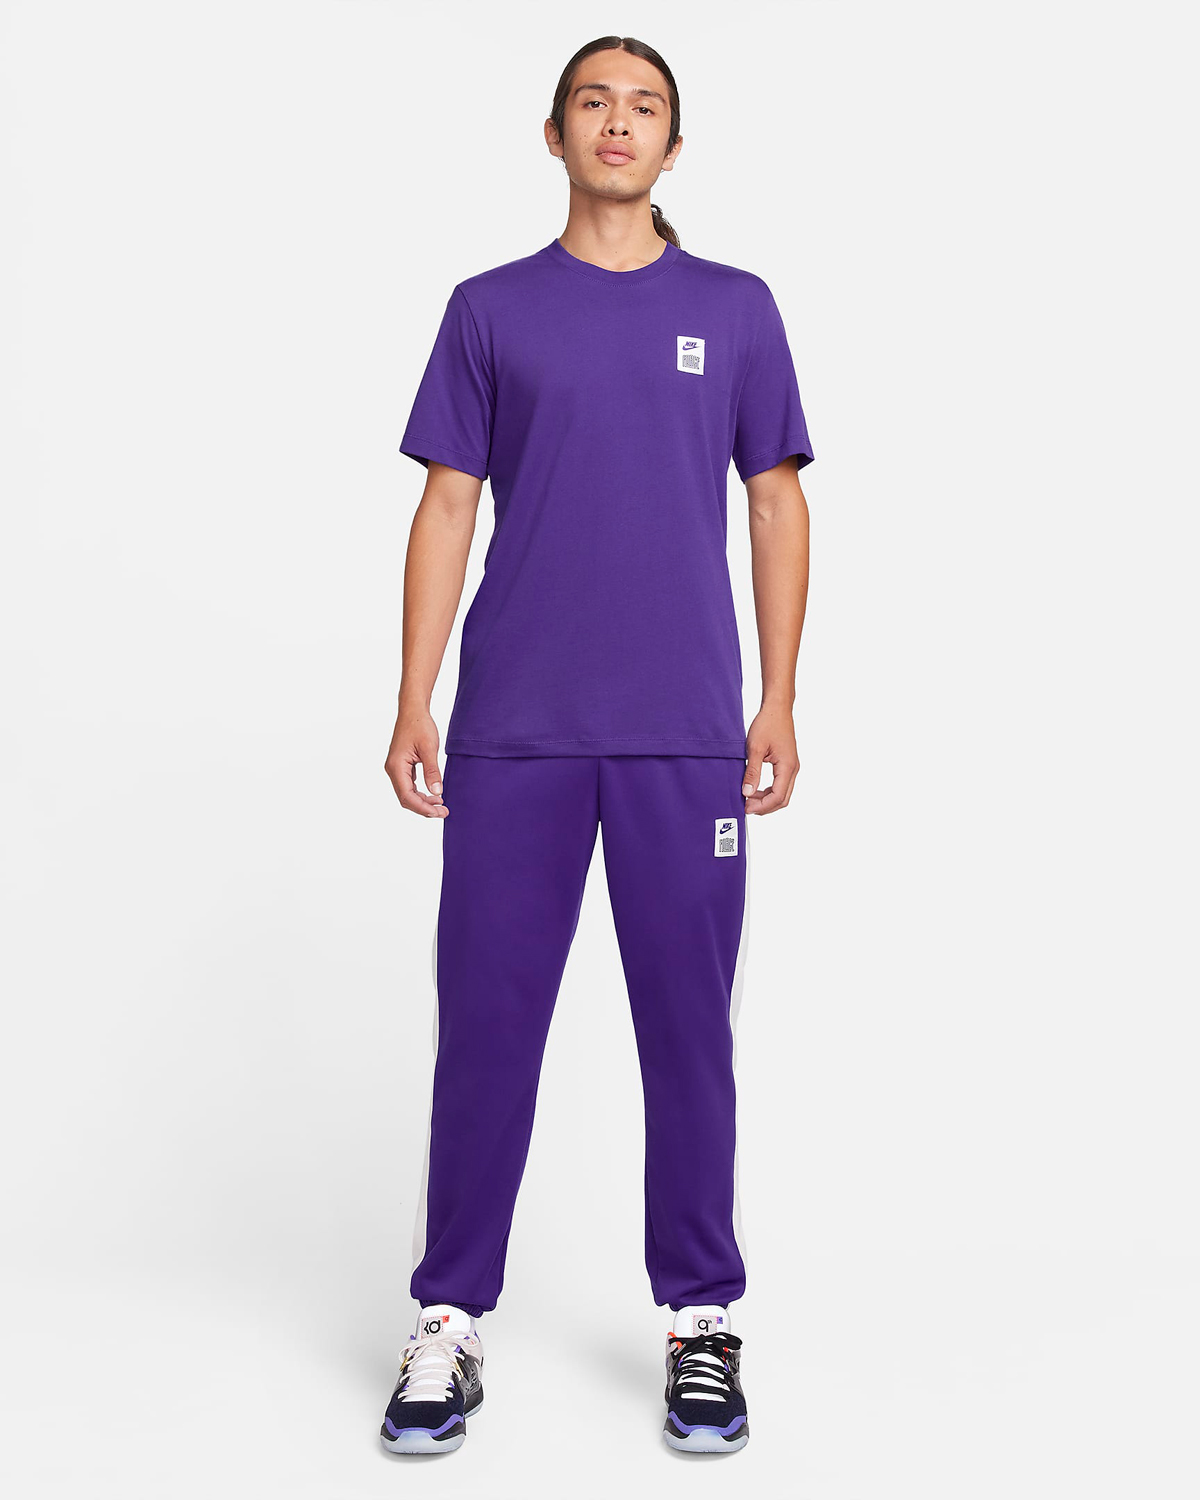 Nike-Starting-5-T-Shirt-Field-Purple